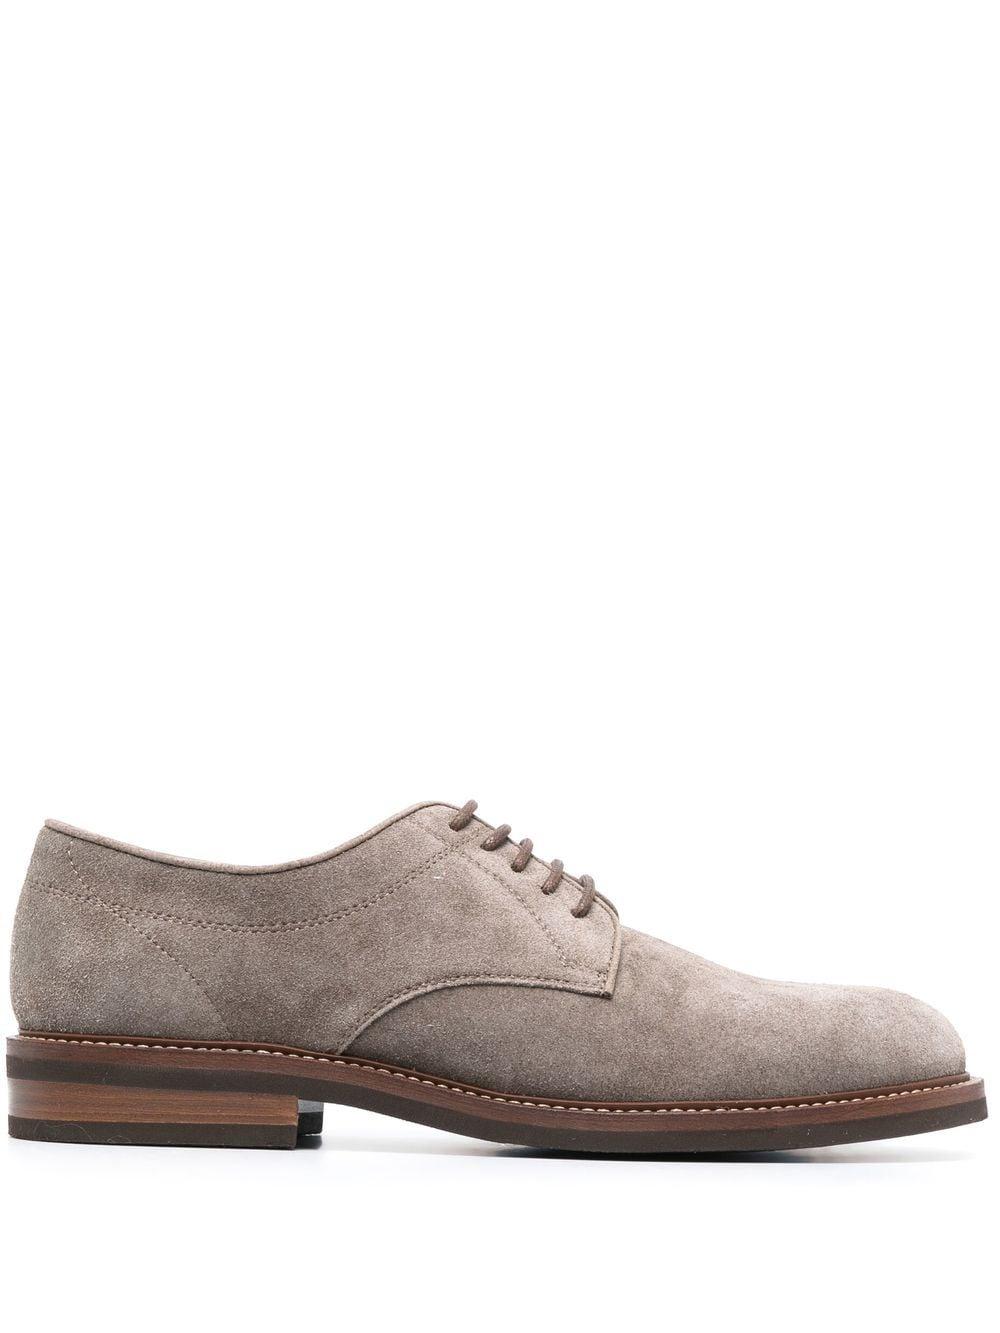 Brunello Cucinelli Derby Suede Shoes in Brown for Men | Lyst